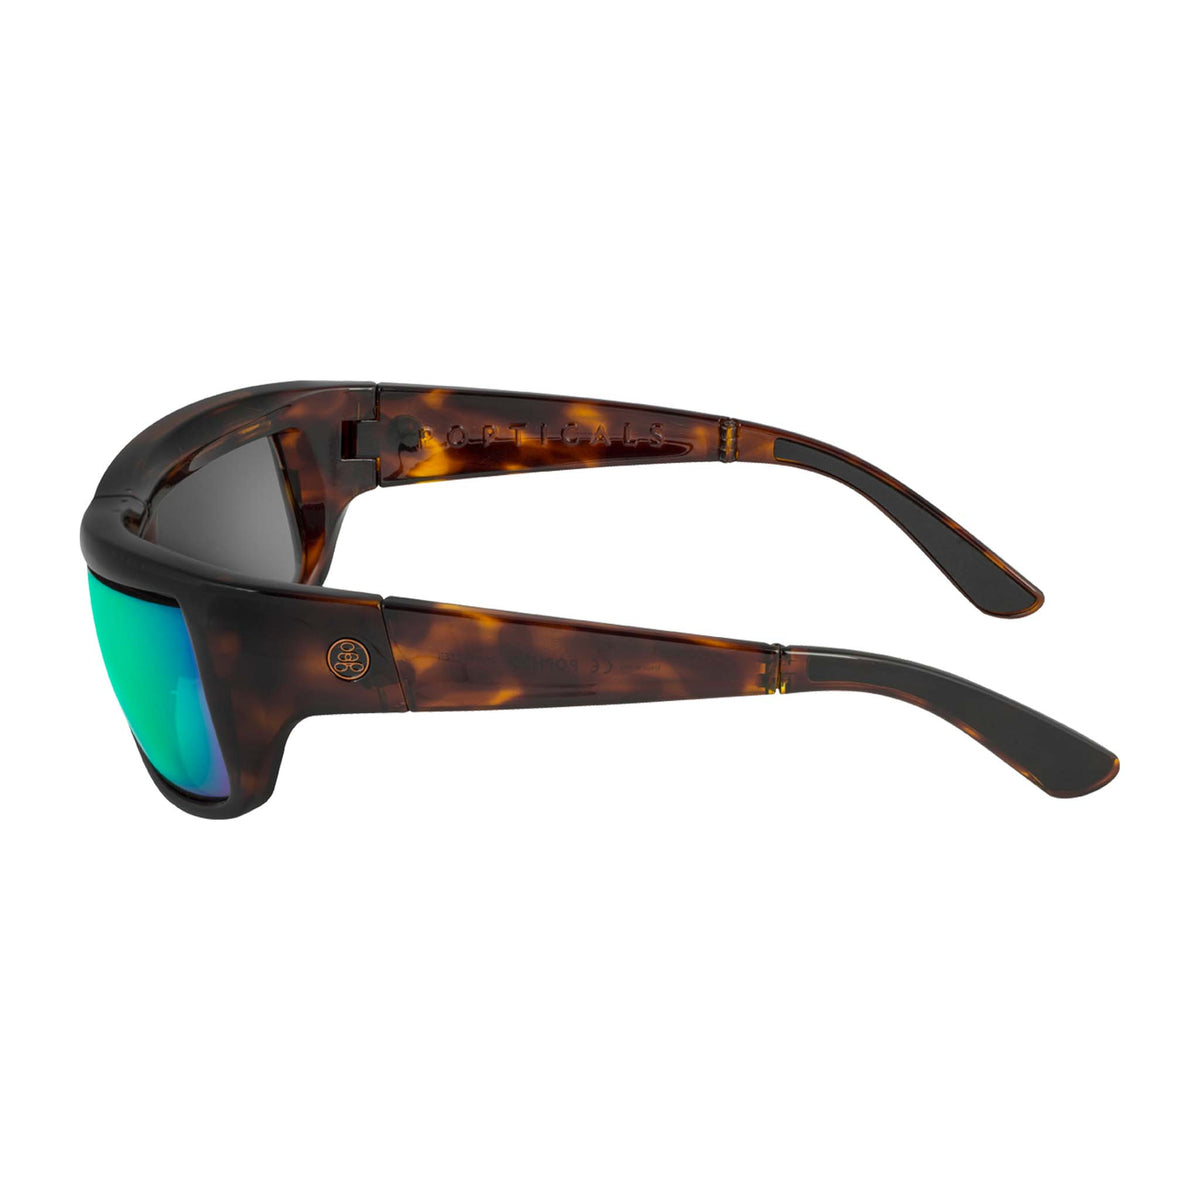 Popticals, Premium Compact Sunglasses, PopH2O, 010070-CTEN, Polarized Sunglasses, Gloss Tortoise Frame, Gray Lenses w/Green Mirror Finish, Side View